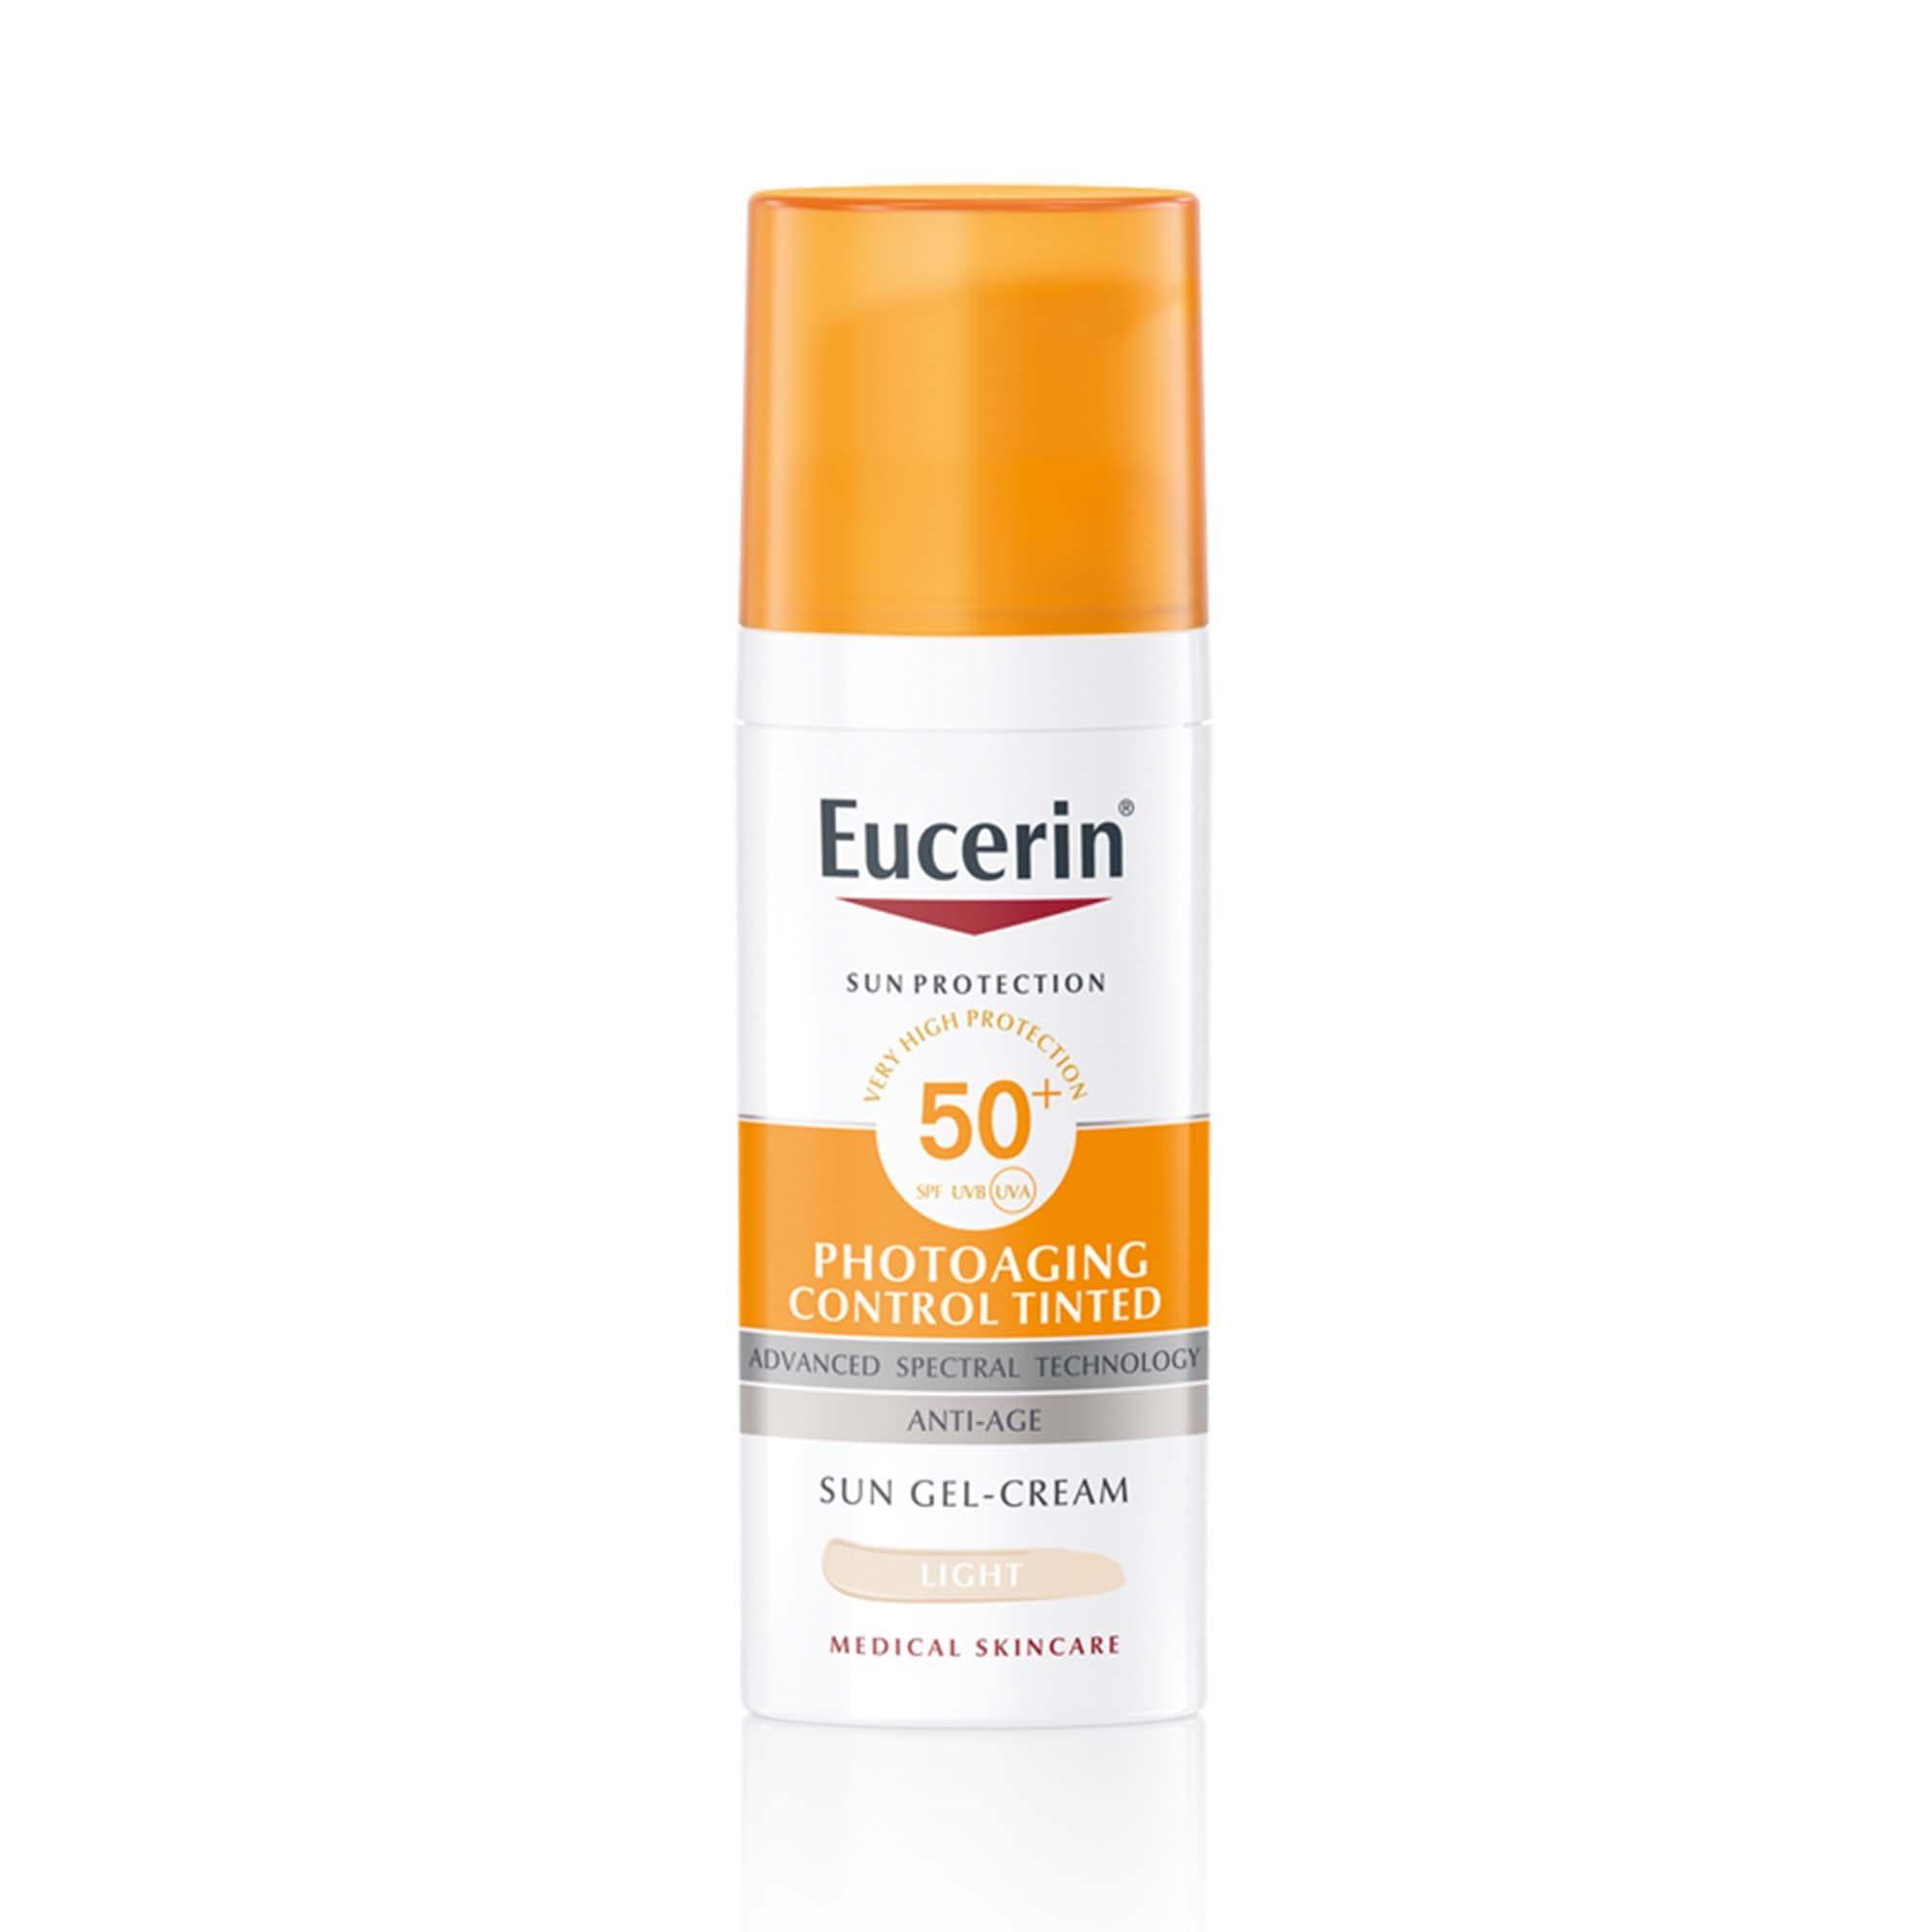 Eucerin Sun Protection Photoaging Control Tinted SPF 50+ Light